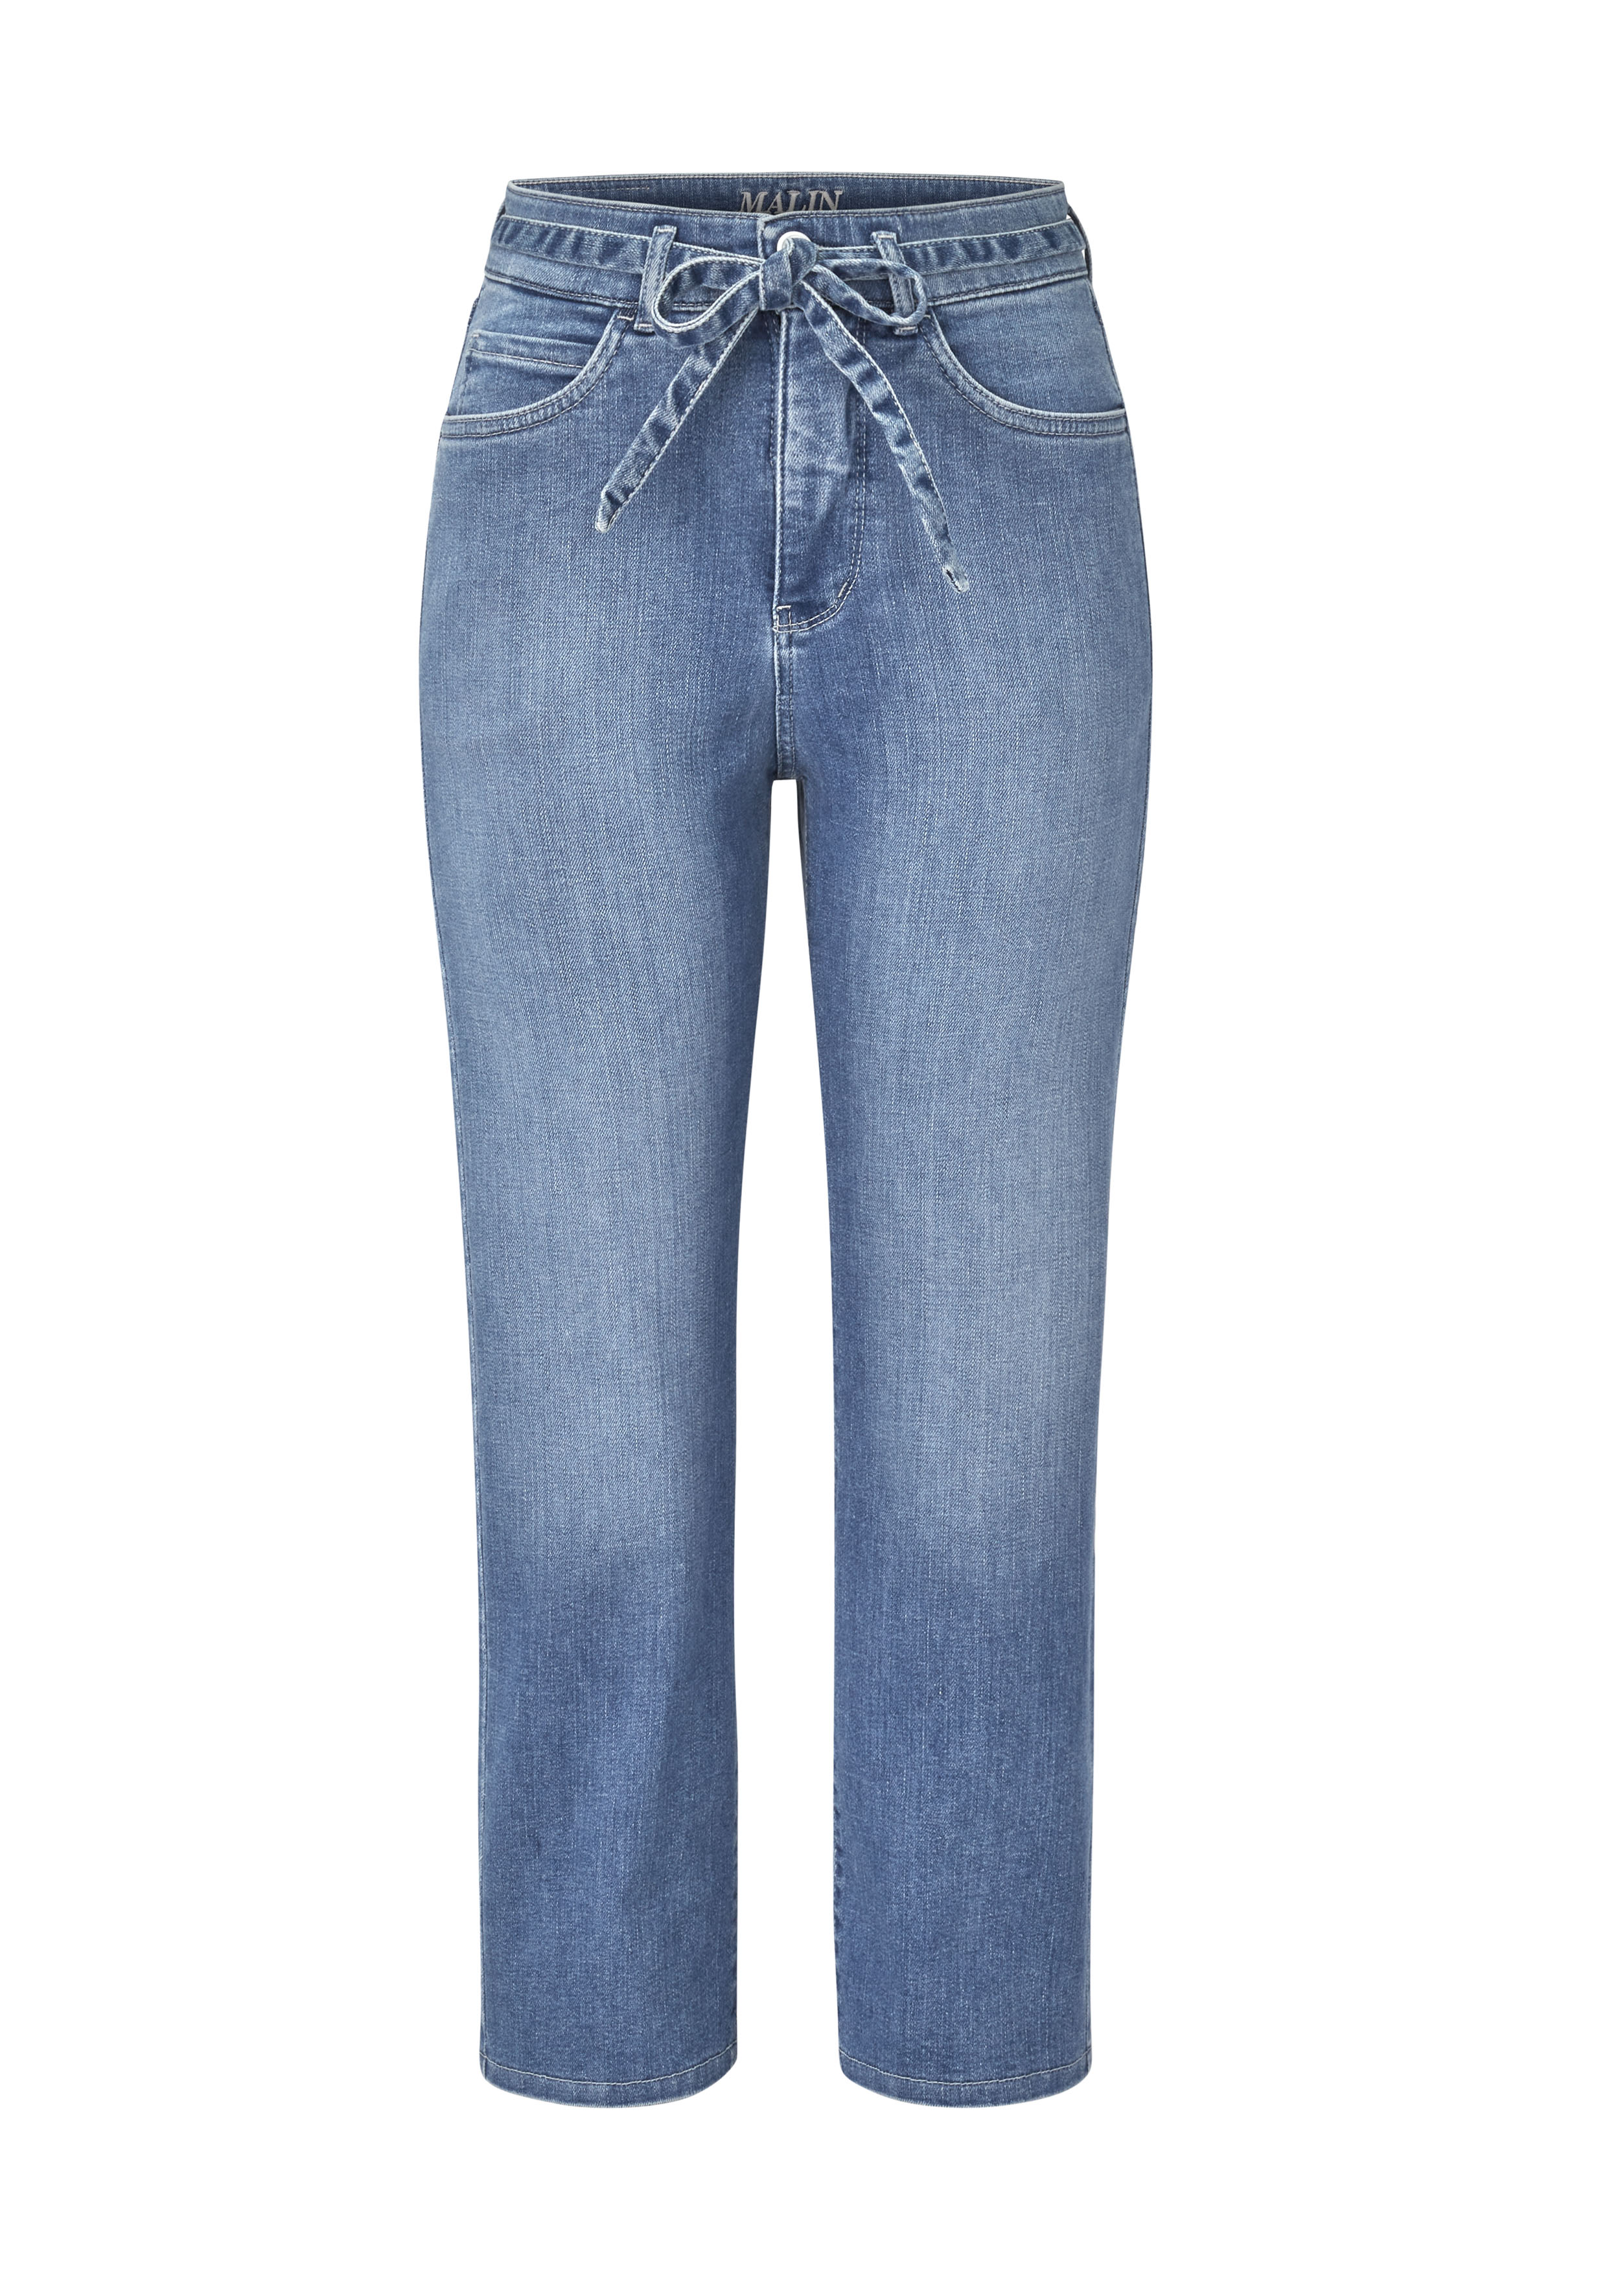 605457121000-4365_damen-slim-fit-flared-jeans-high-rise-malin-paddocks_1.jpg